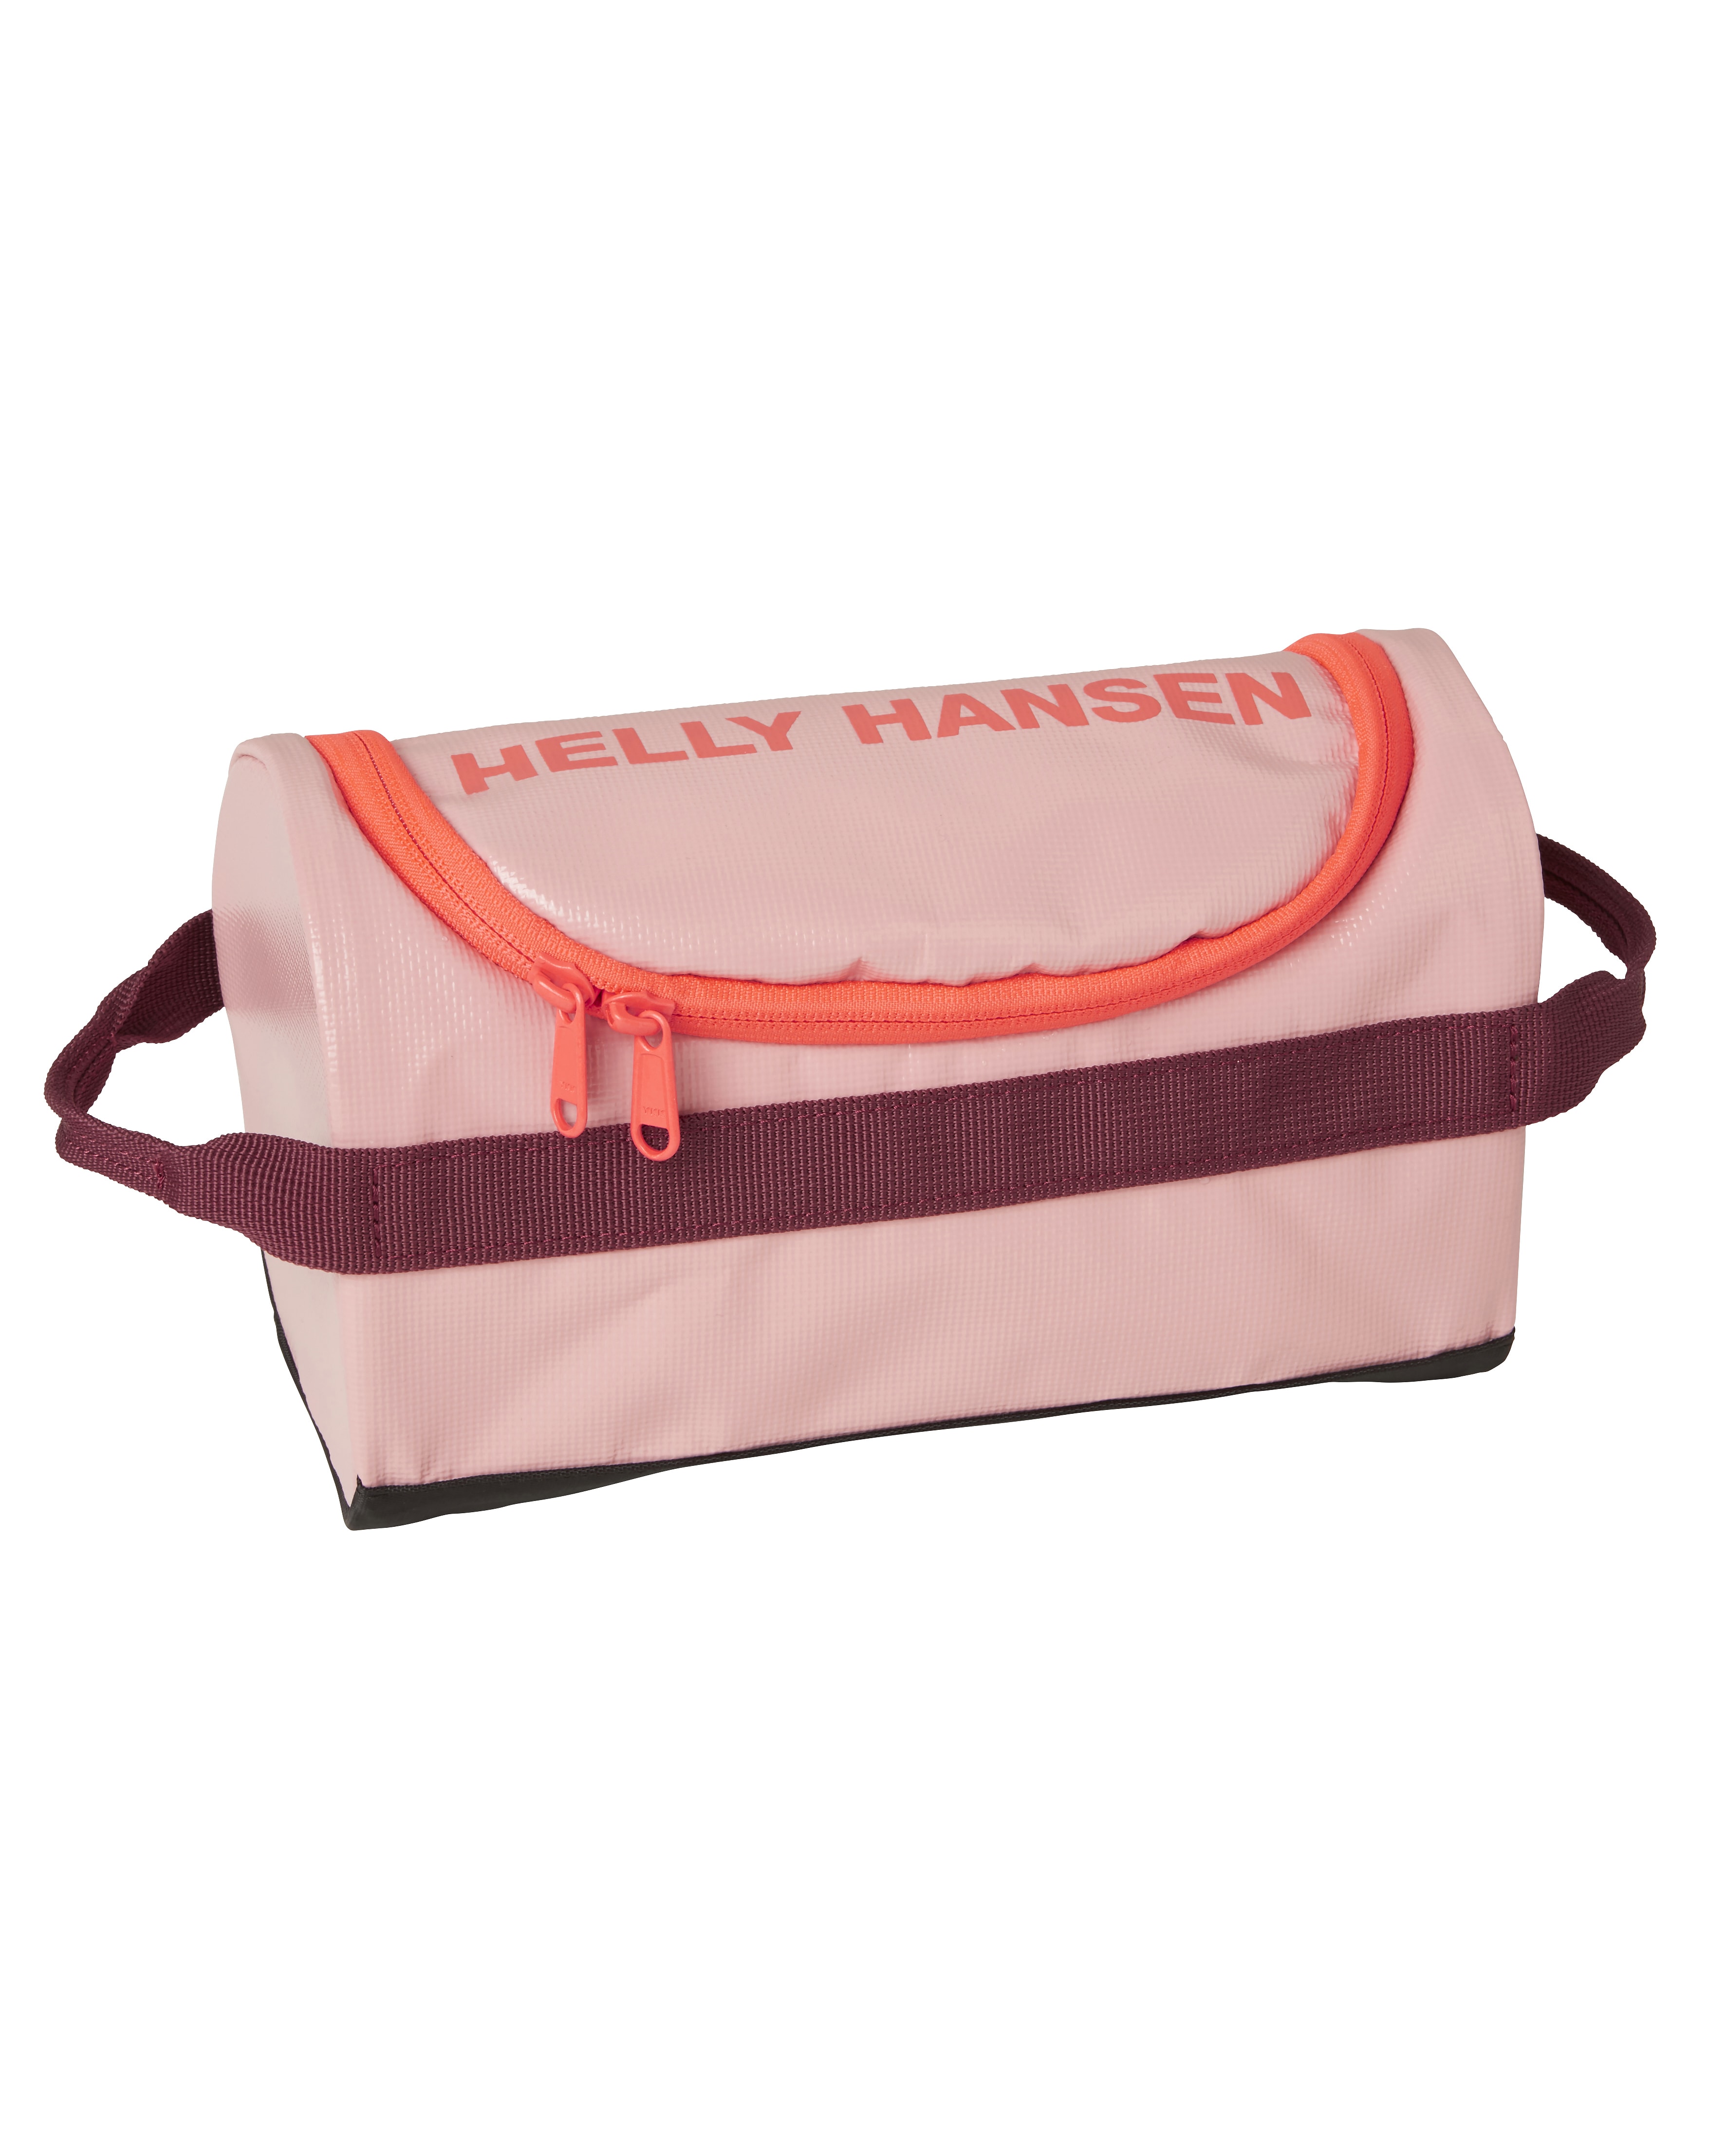 Helly Hansen Classic Wash Bag - Blush